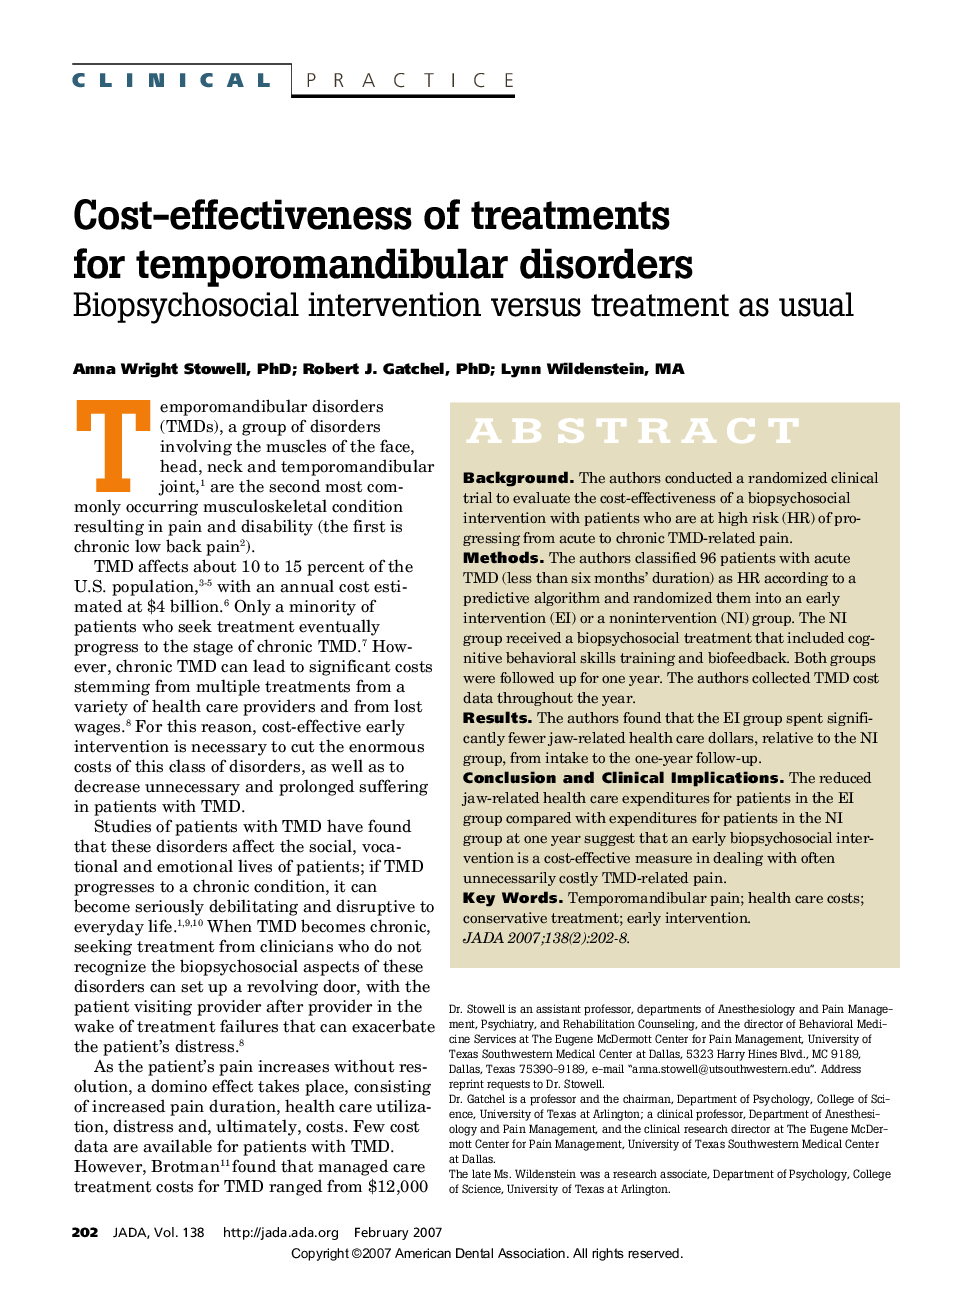 Cost-effectiveness of treatments for temporomandibular disorders